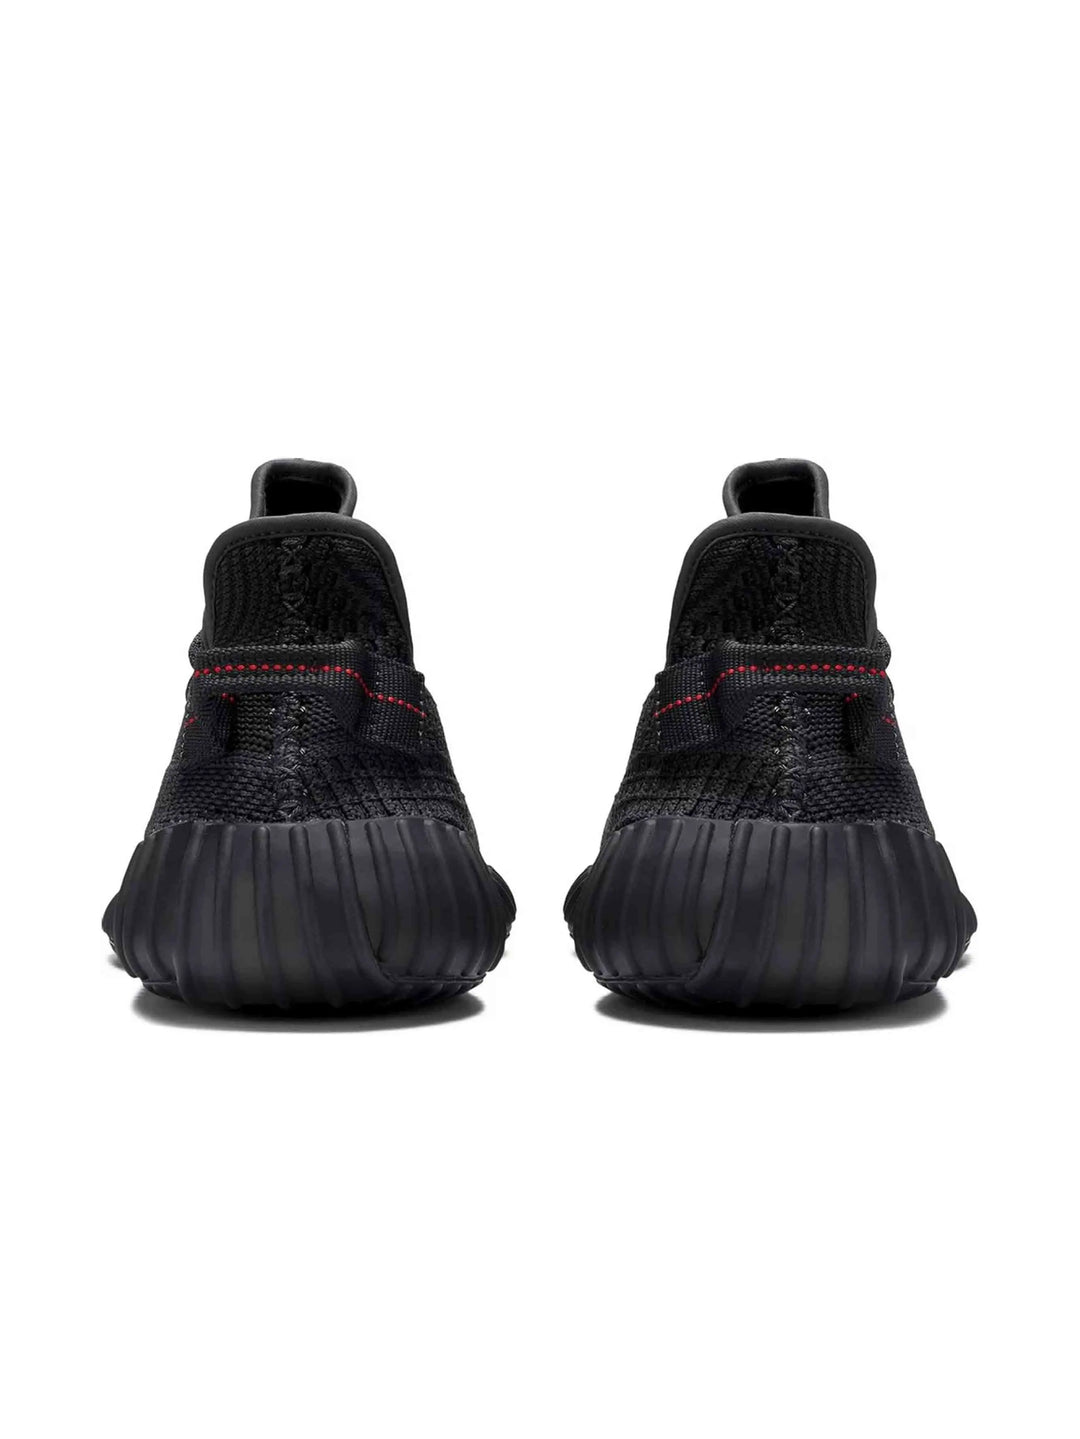 adidas Yeezy Boost 350 V2 Black (Non-Reflective) Prior